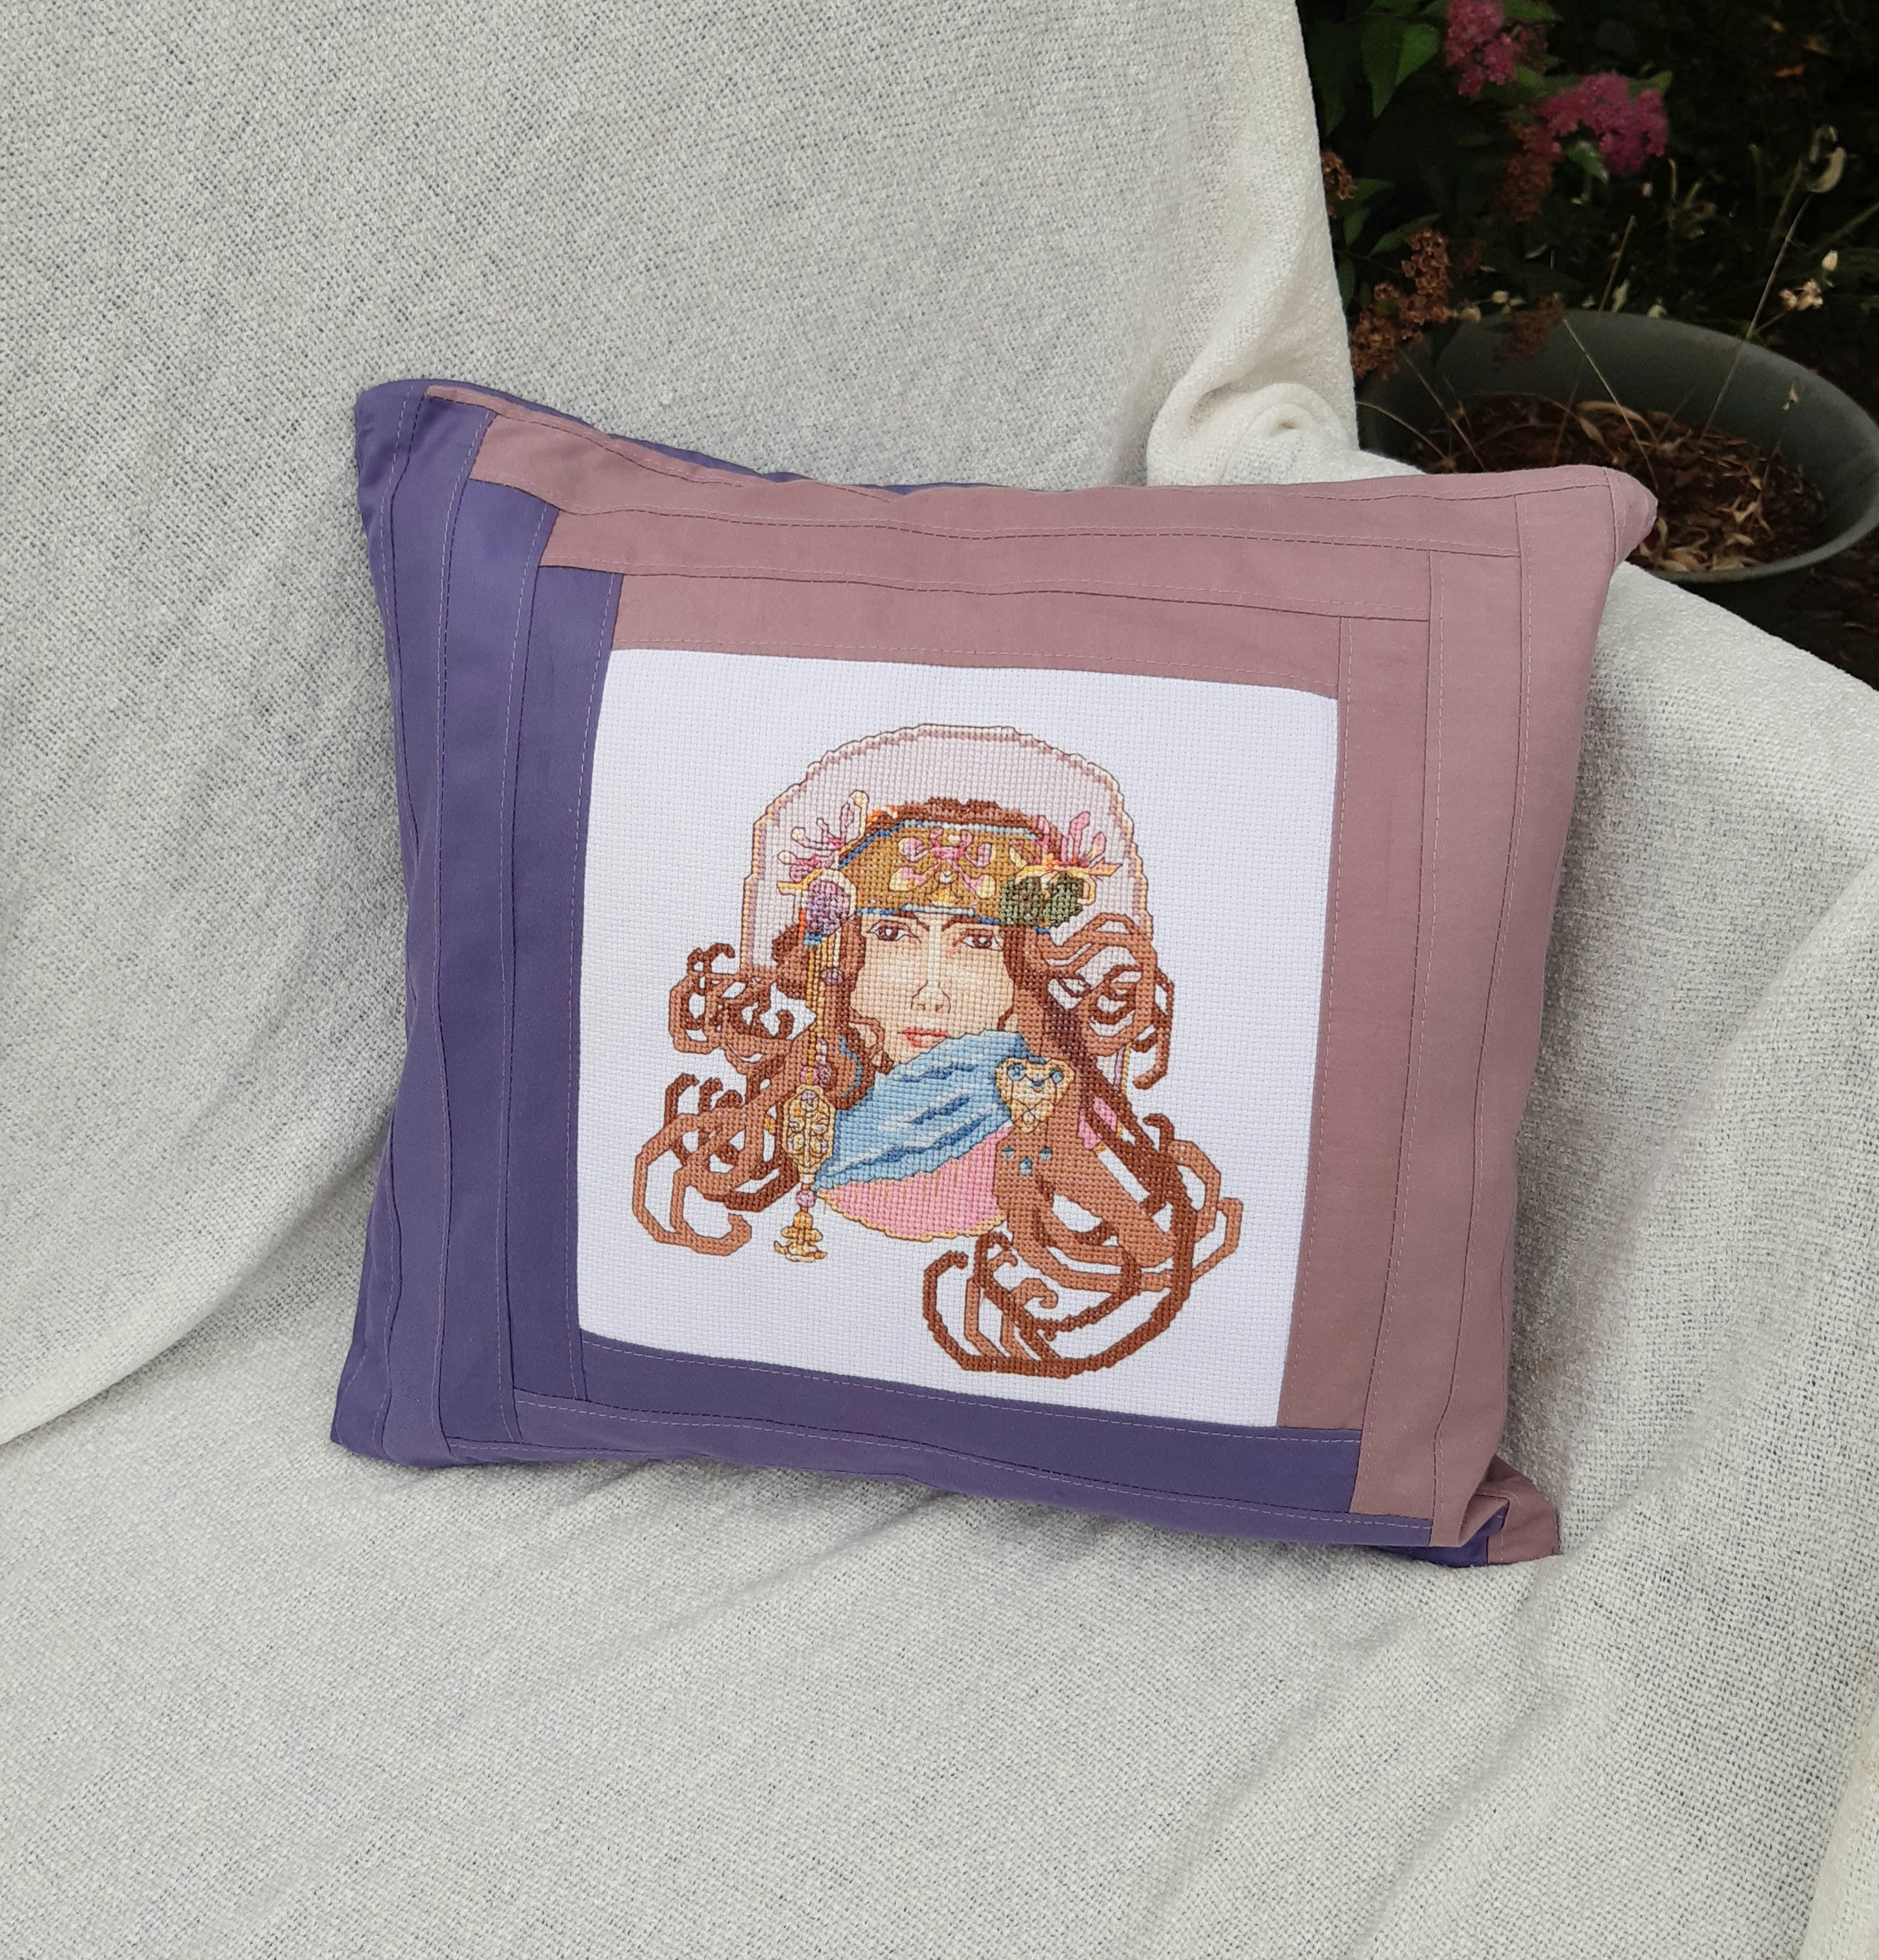 Art Nouveau inspired cross-stitch cushion cover